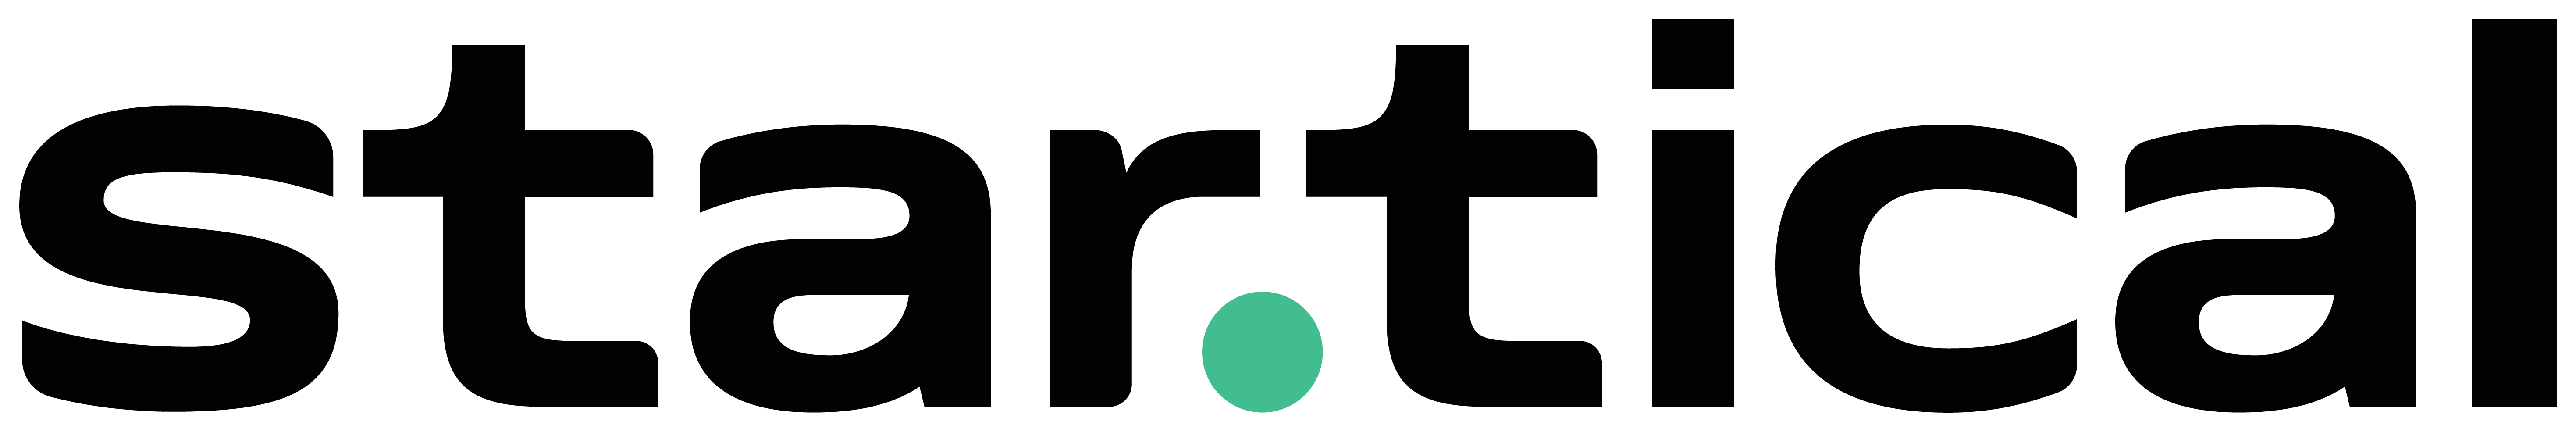 Startical logo